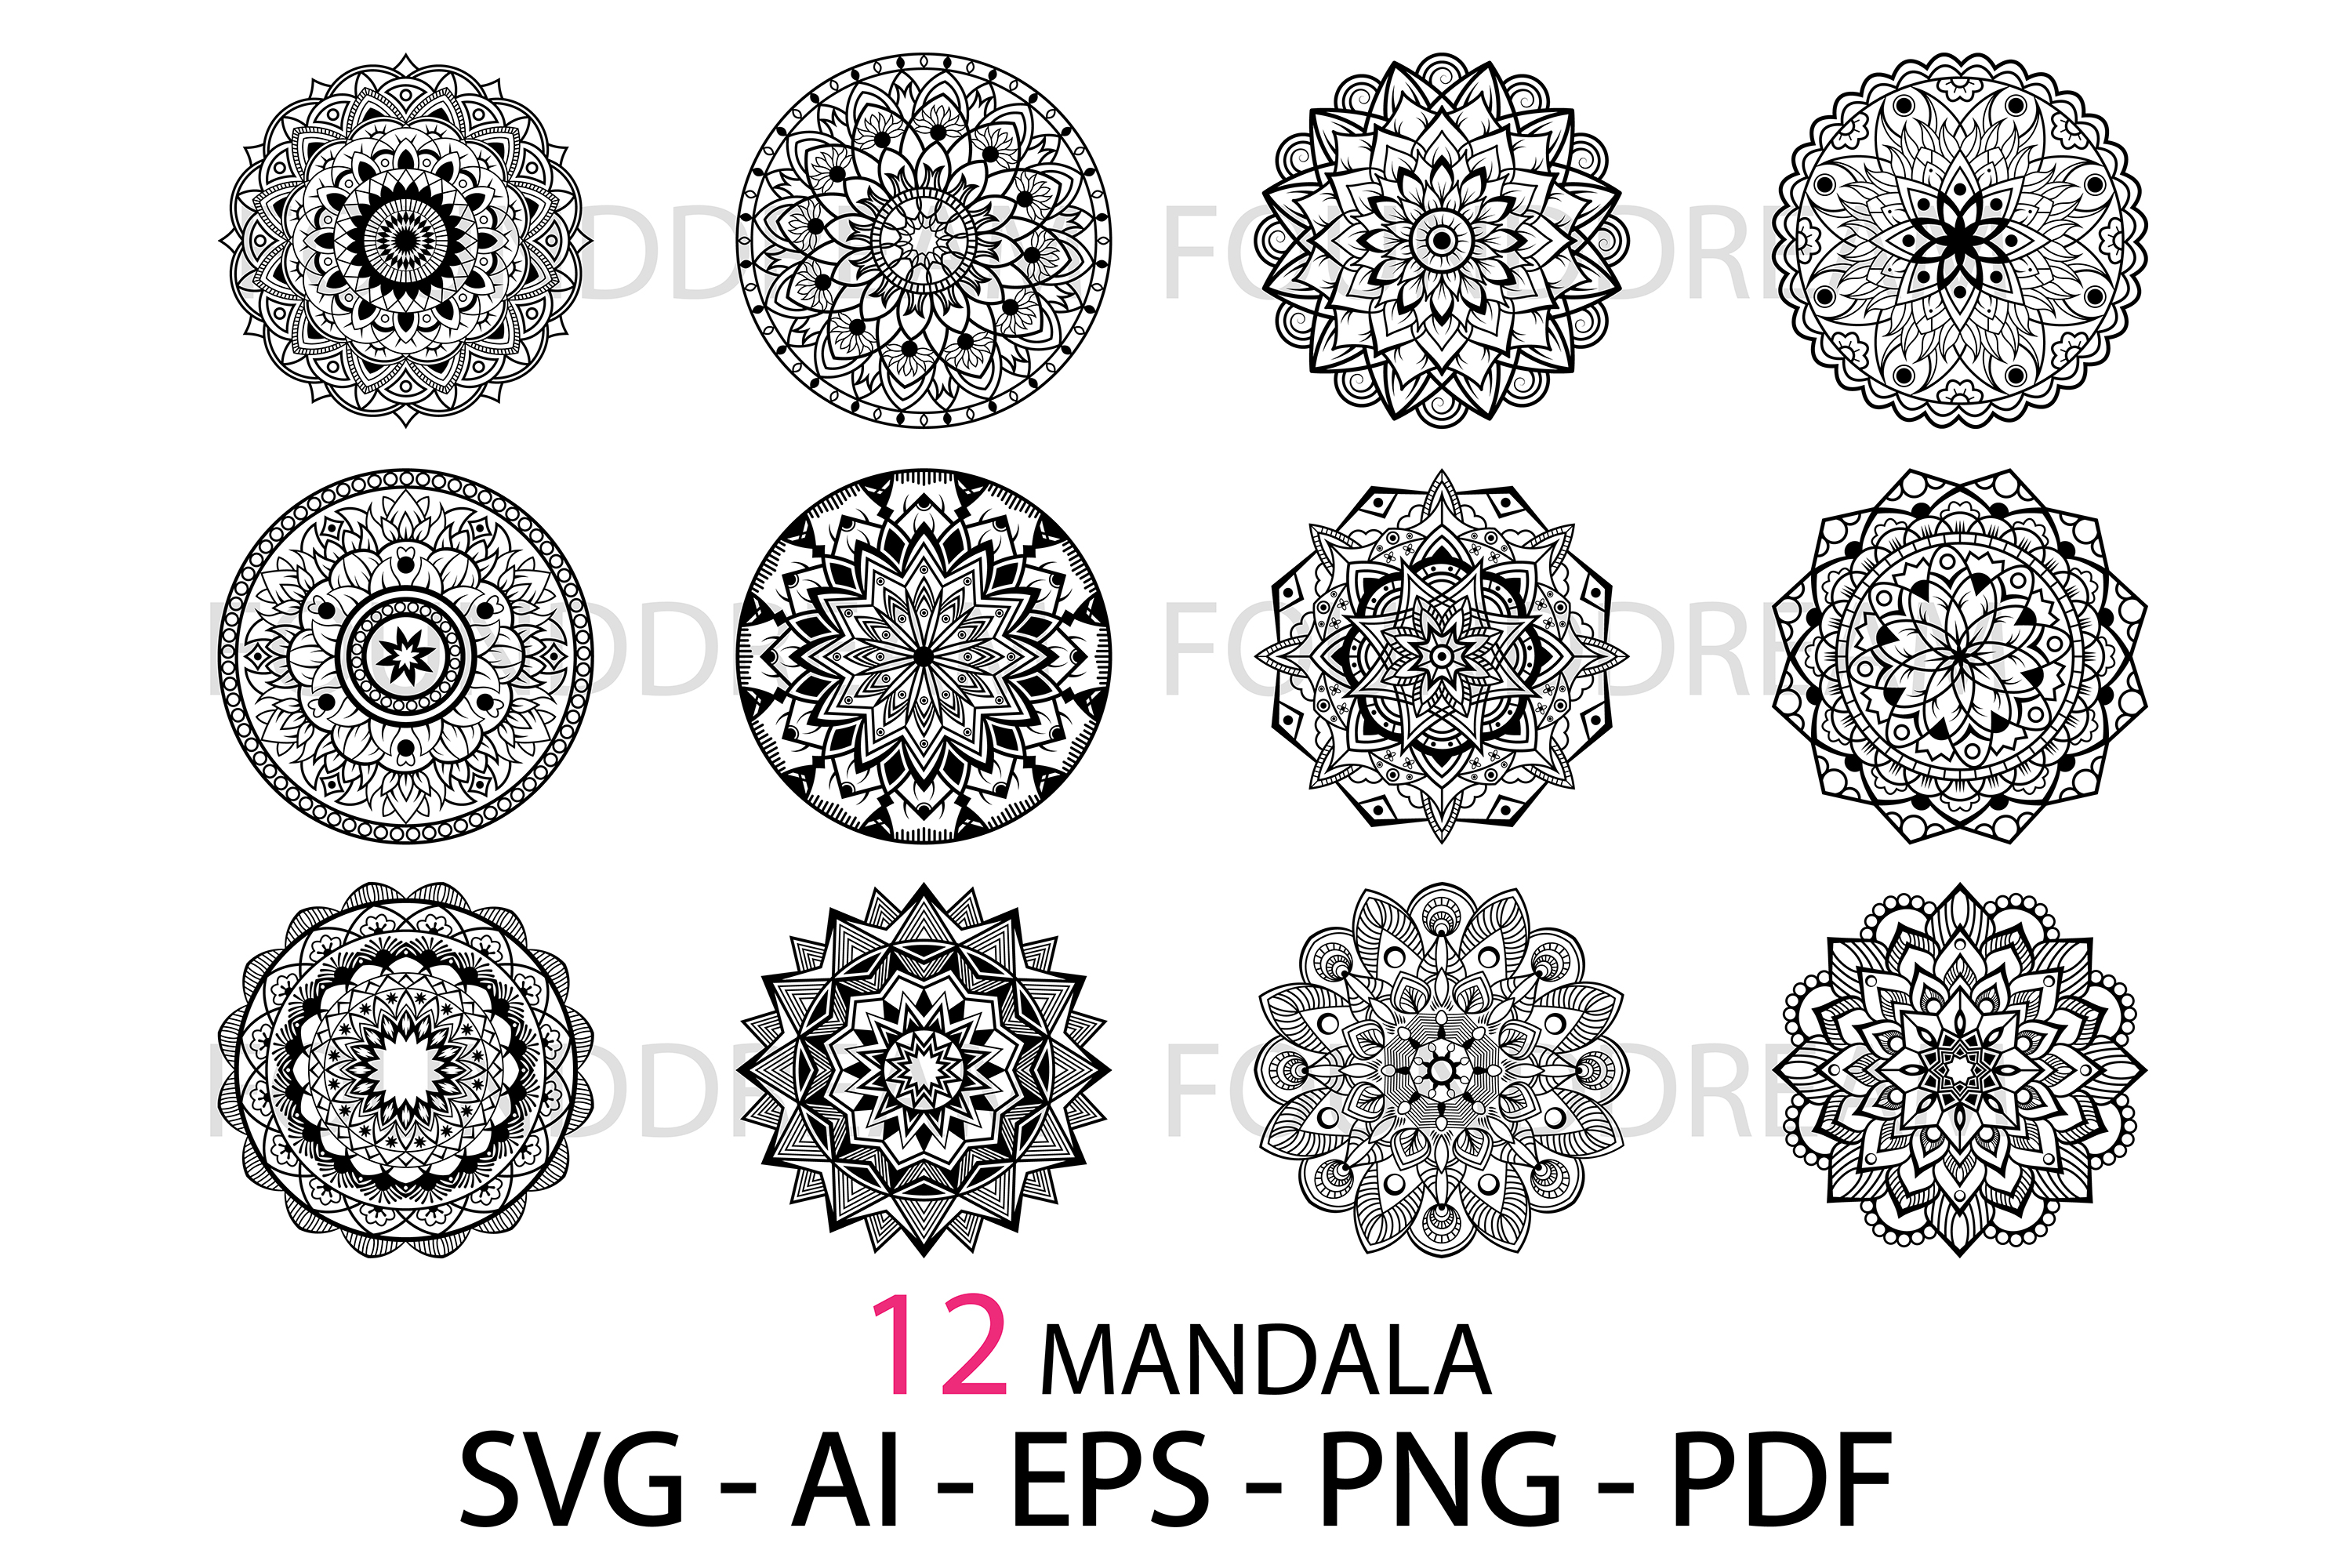 Mandala svg files